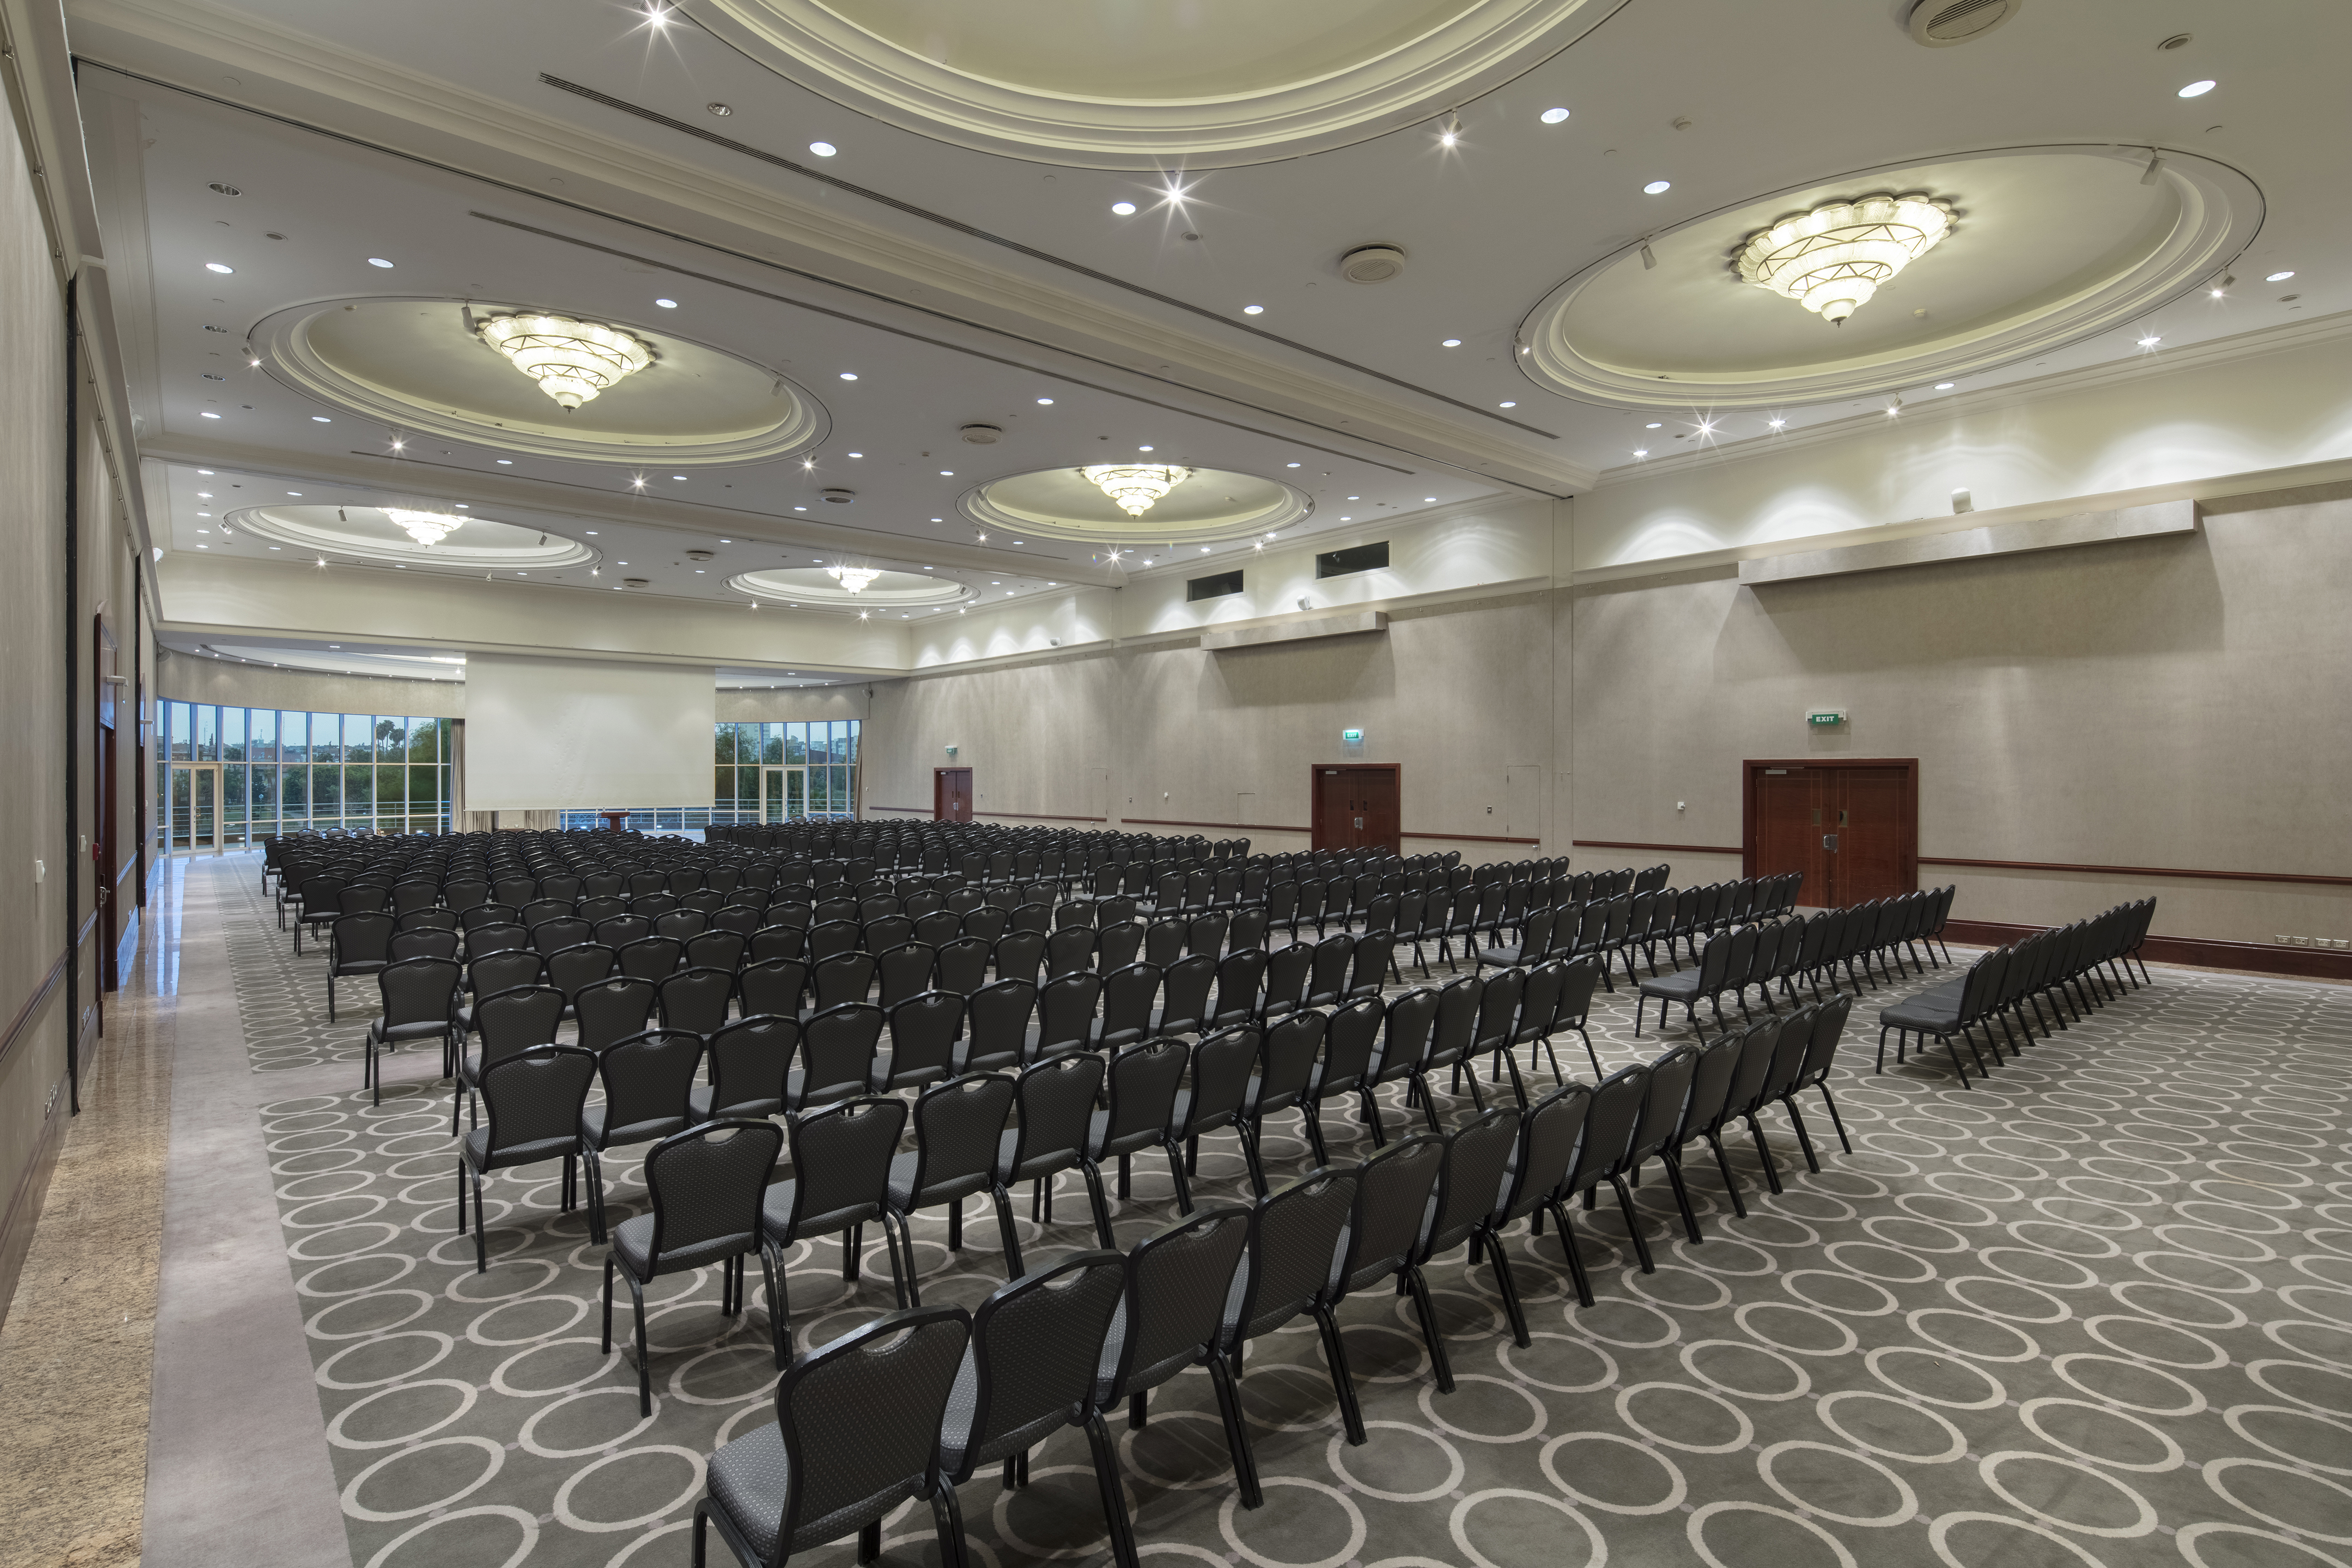 Adana HiltonSA Ballroom Combined with Theatre Set Up